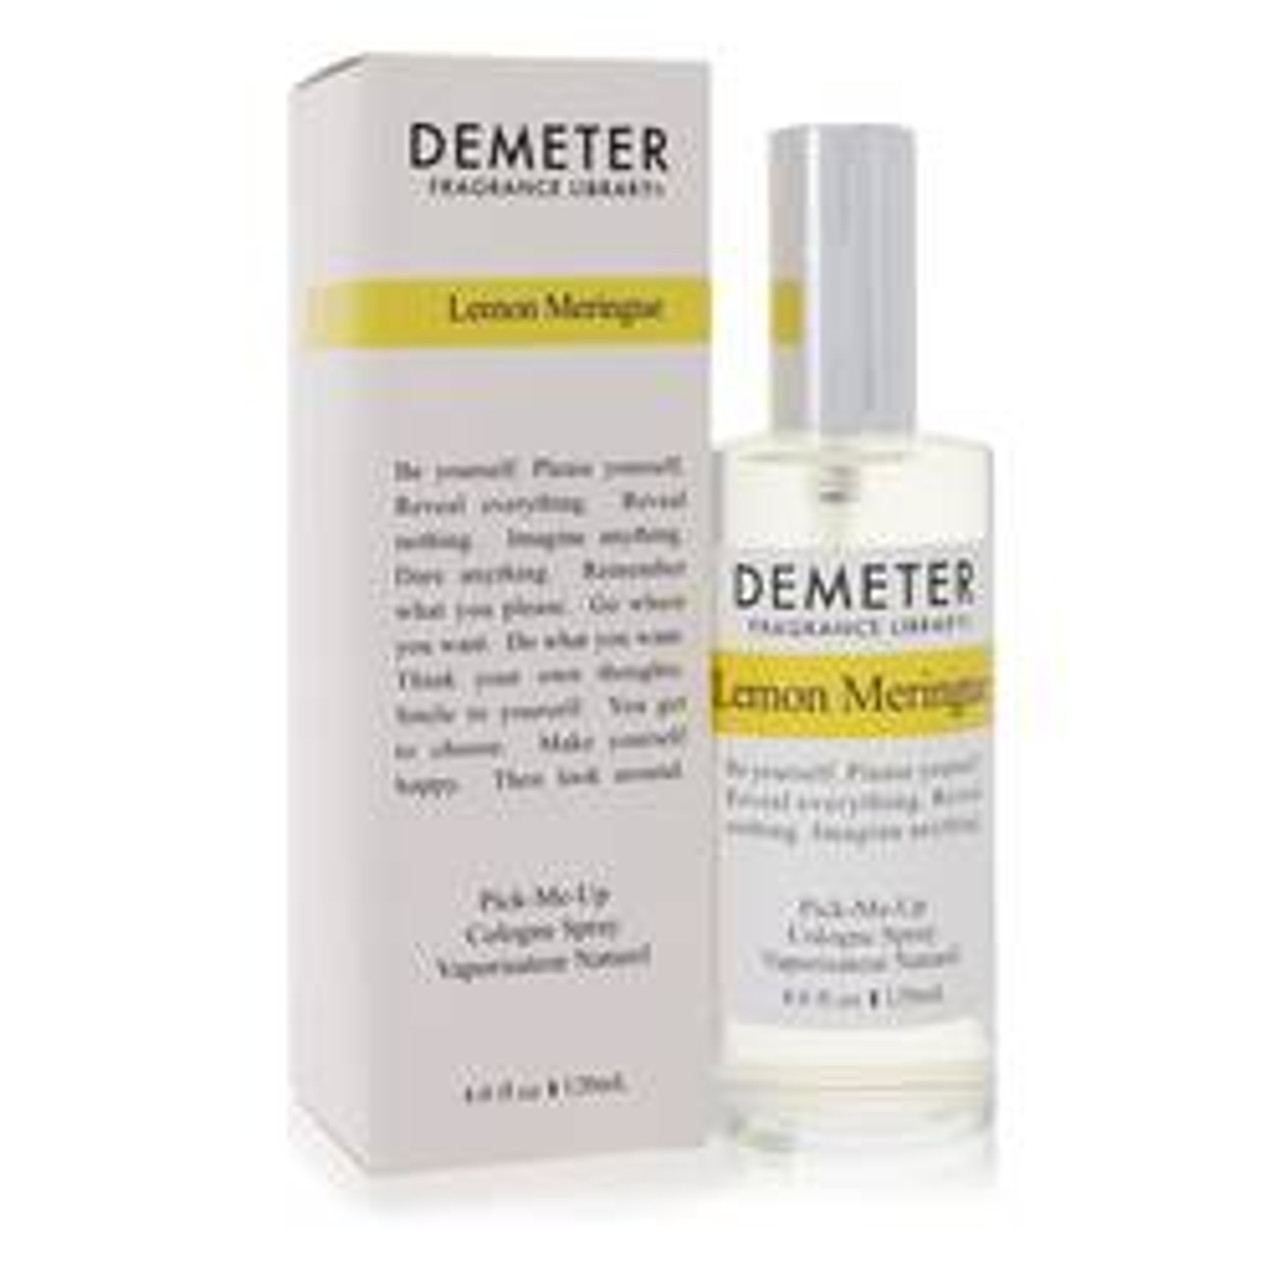 Demeter Lemon Meringue Perfume By Demeter Cologne Spray (Unisex) 4 oz for Women - [From 79.50 - Choose pk Qty ] - *Ships from Miami